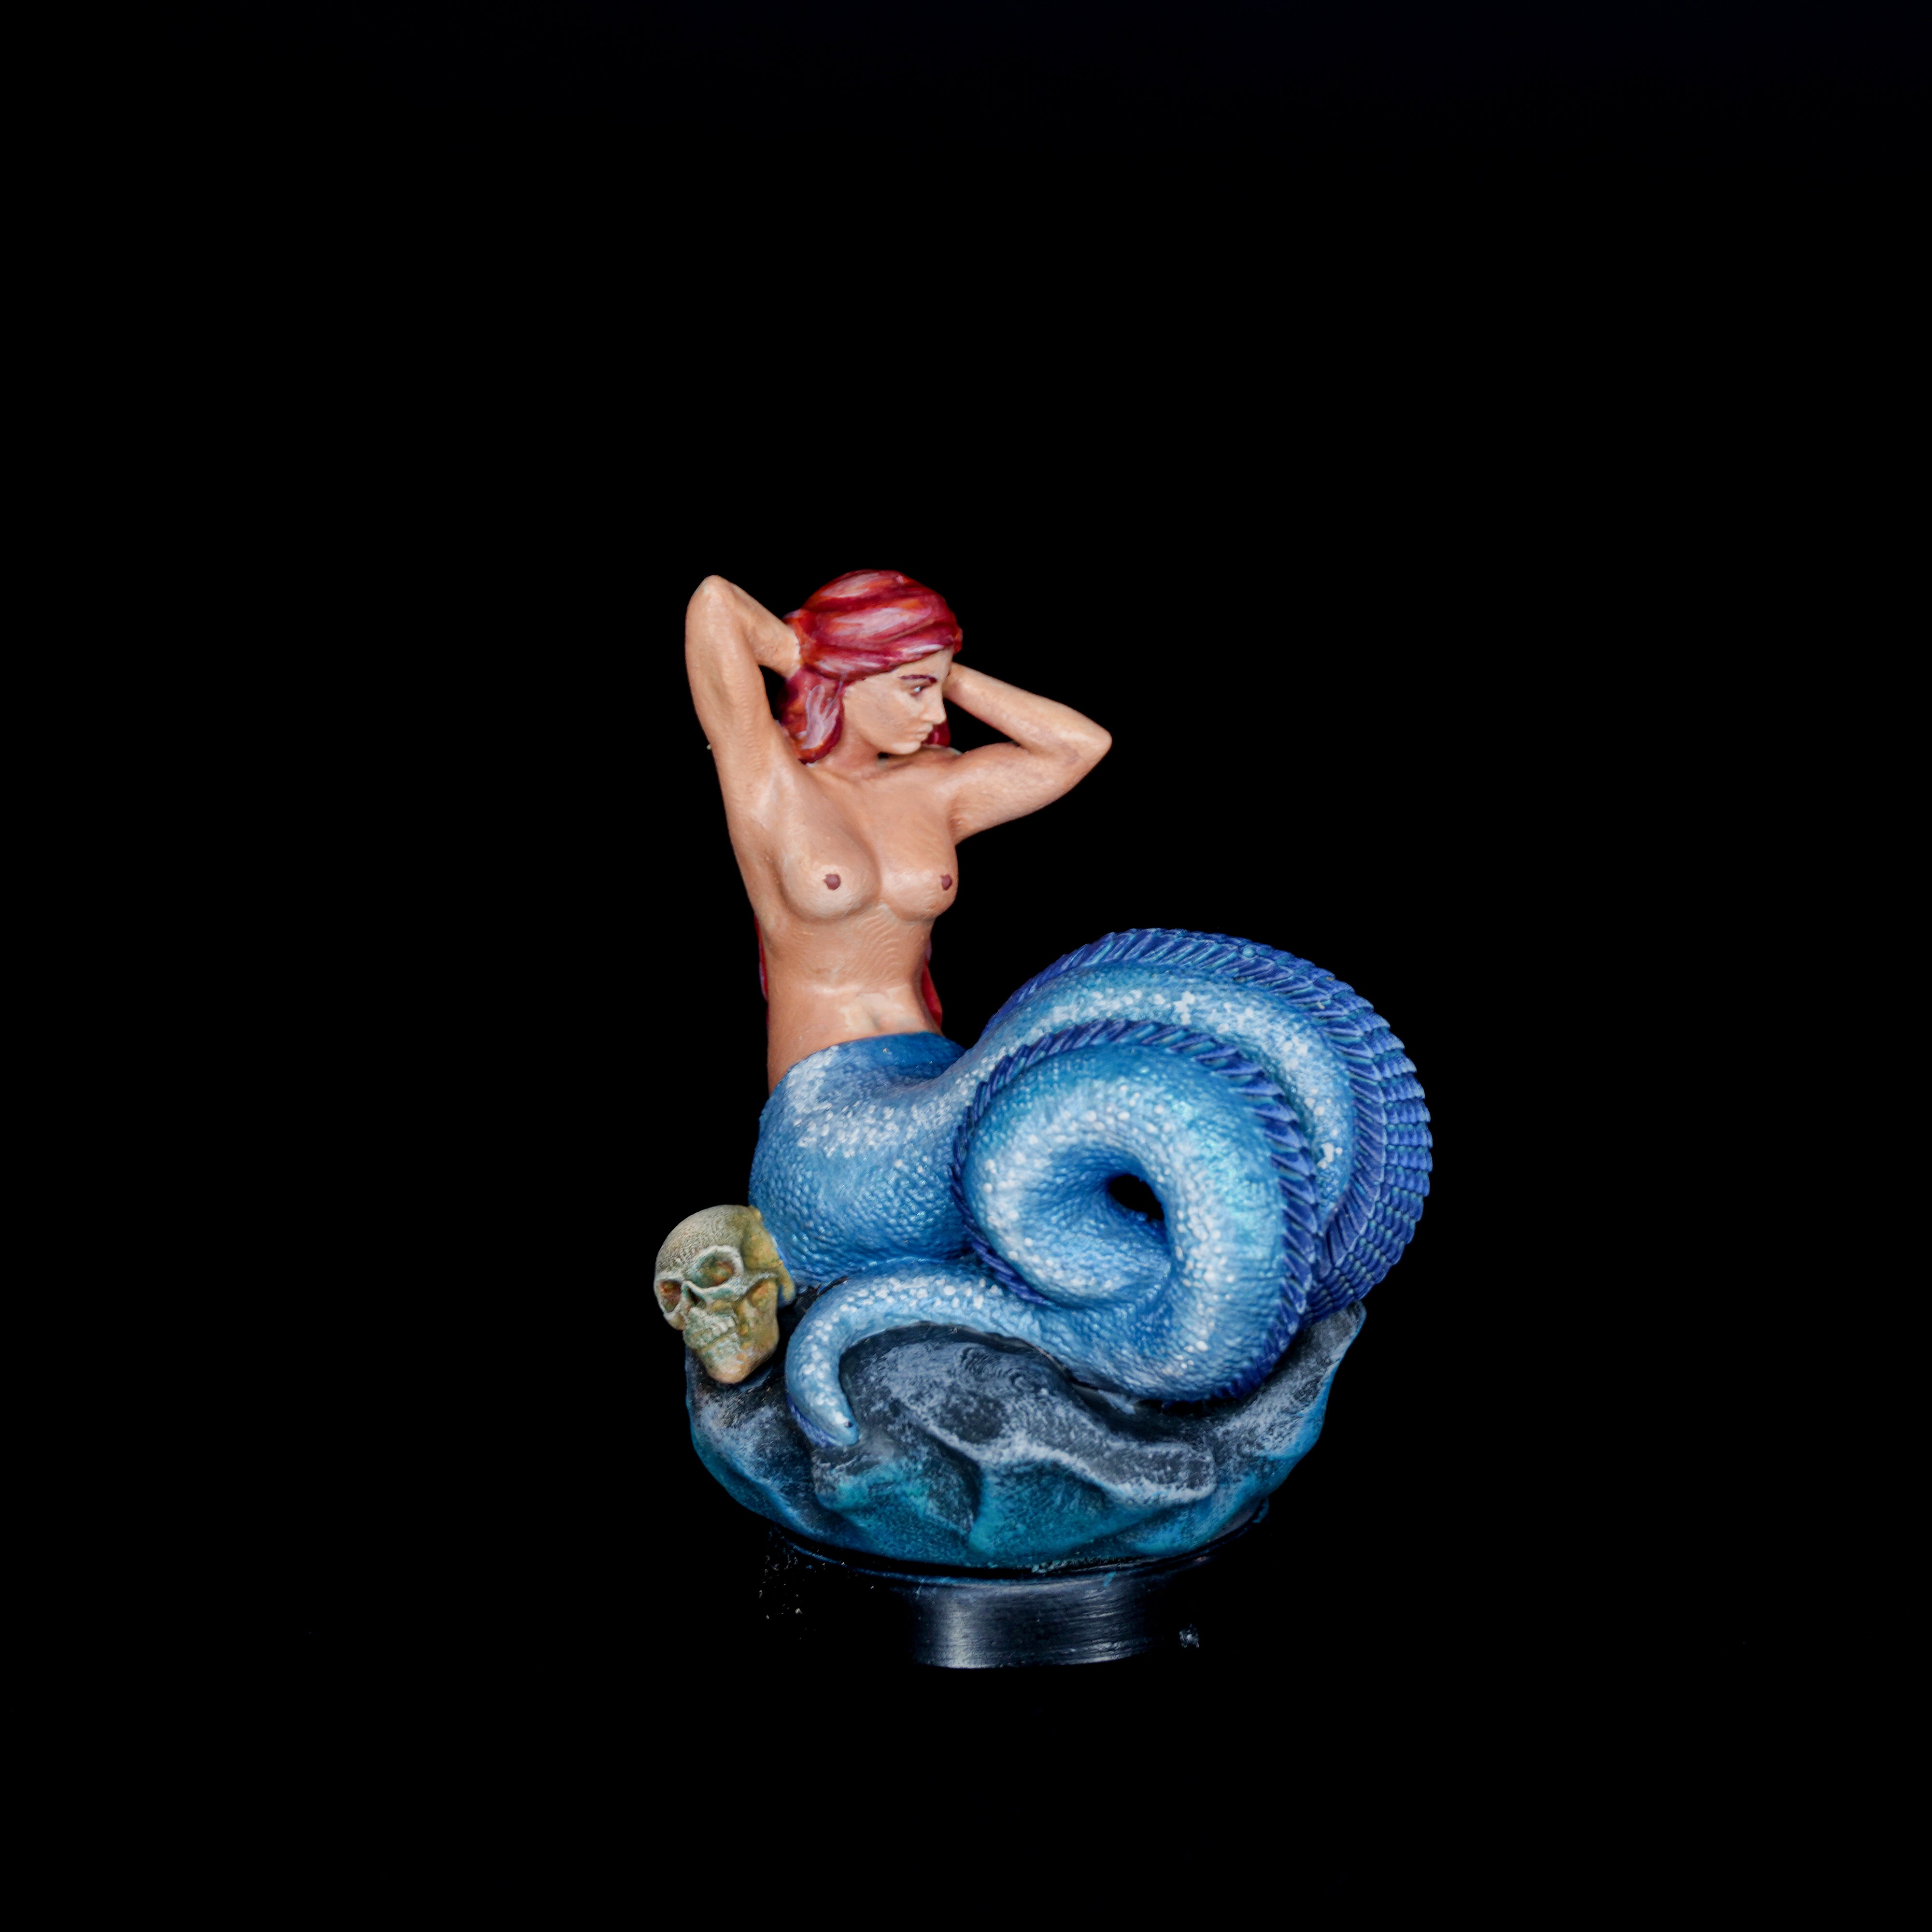 Mermaid - 32mm Scale Physical OR Digital Miniature